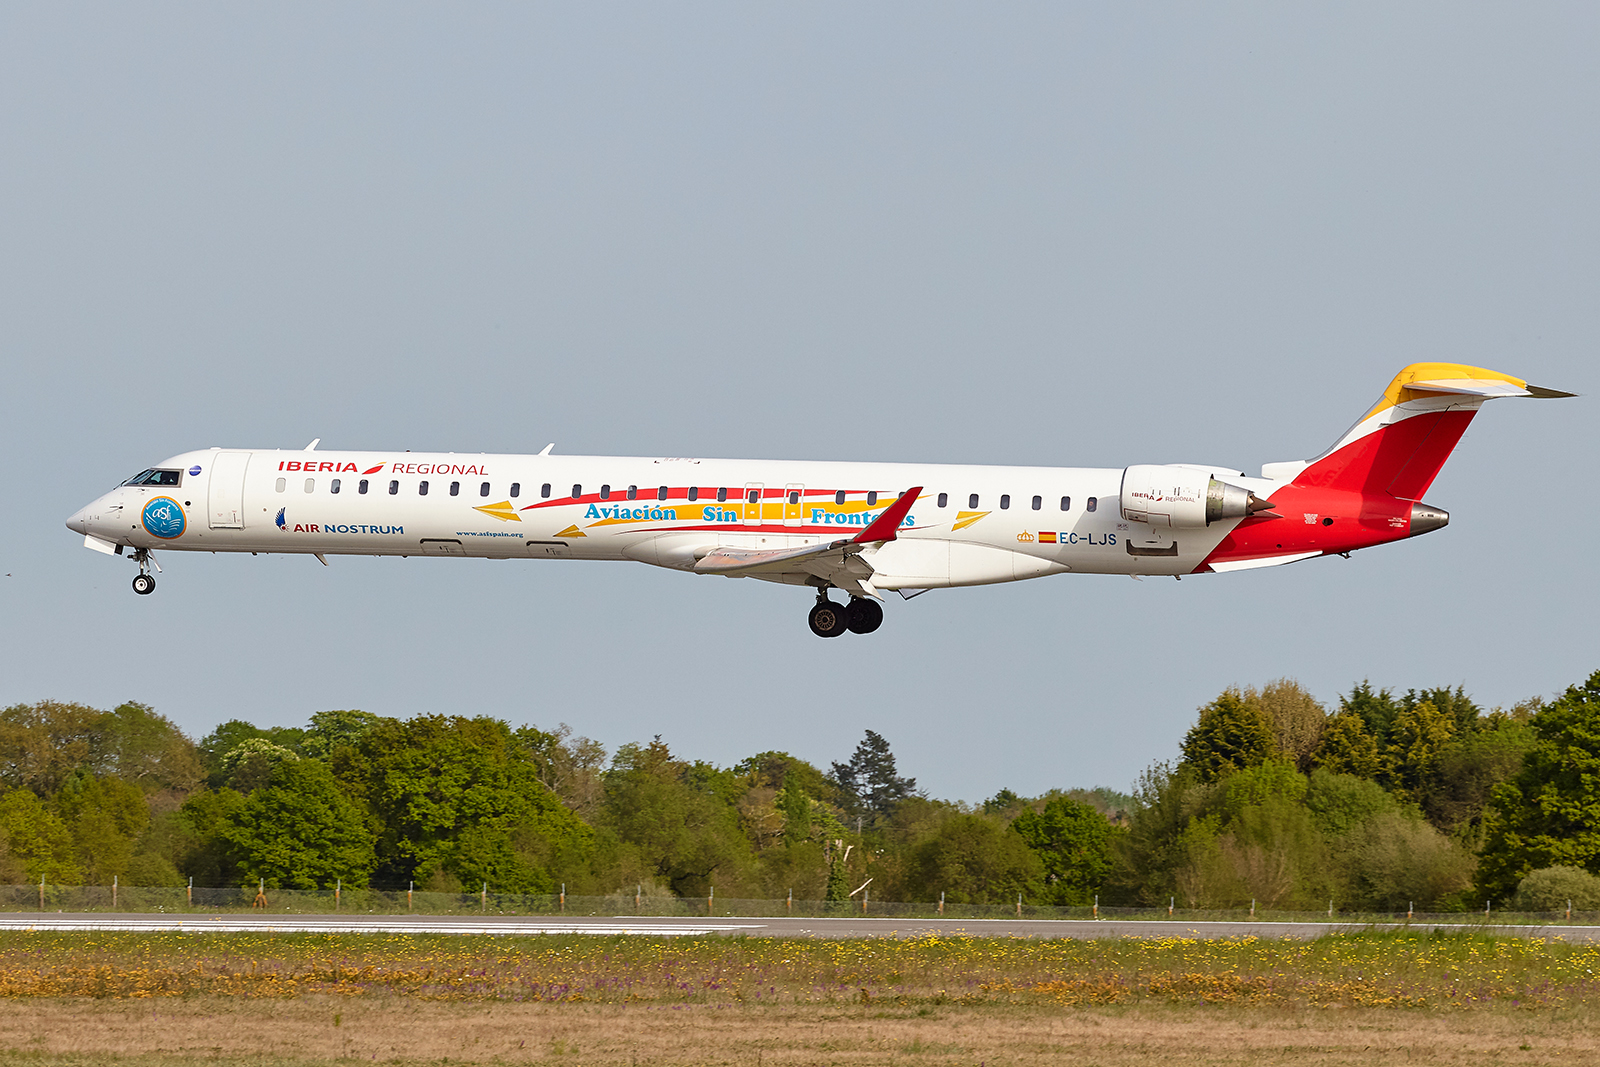  [30/03/2019] CRJ1000 (EC-LJS) Iberia Regional "Aviacion sin fronteras"lencia CF" livery 1904231051355493216209094